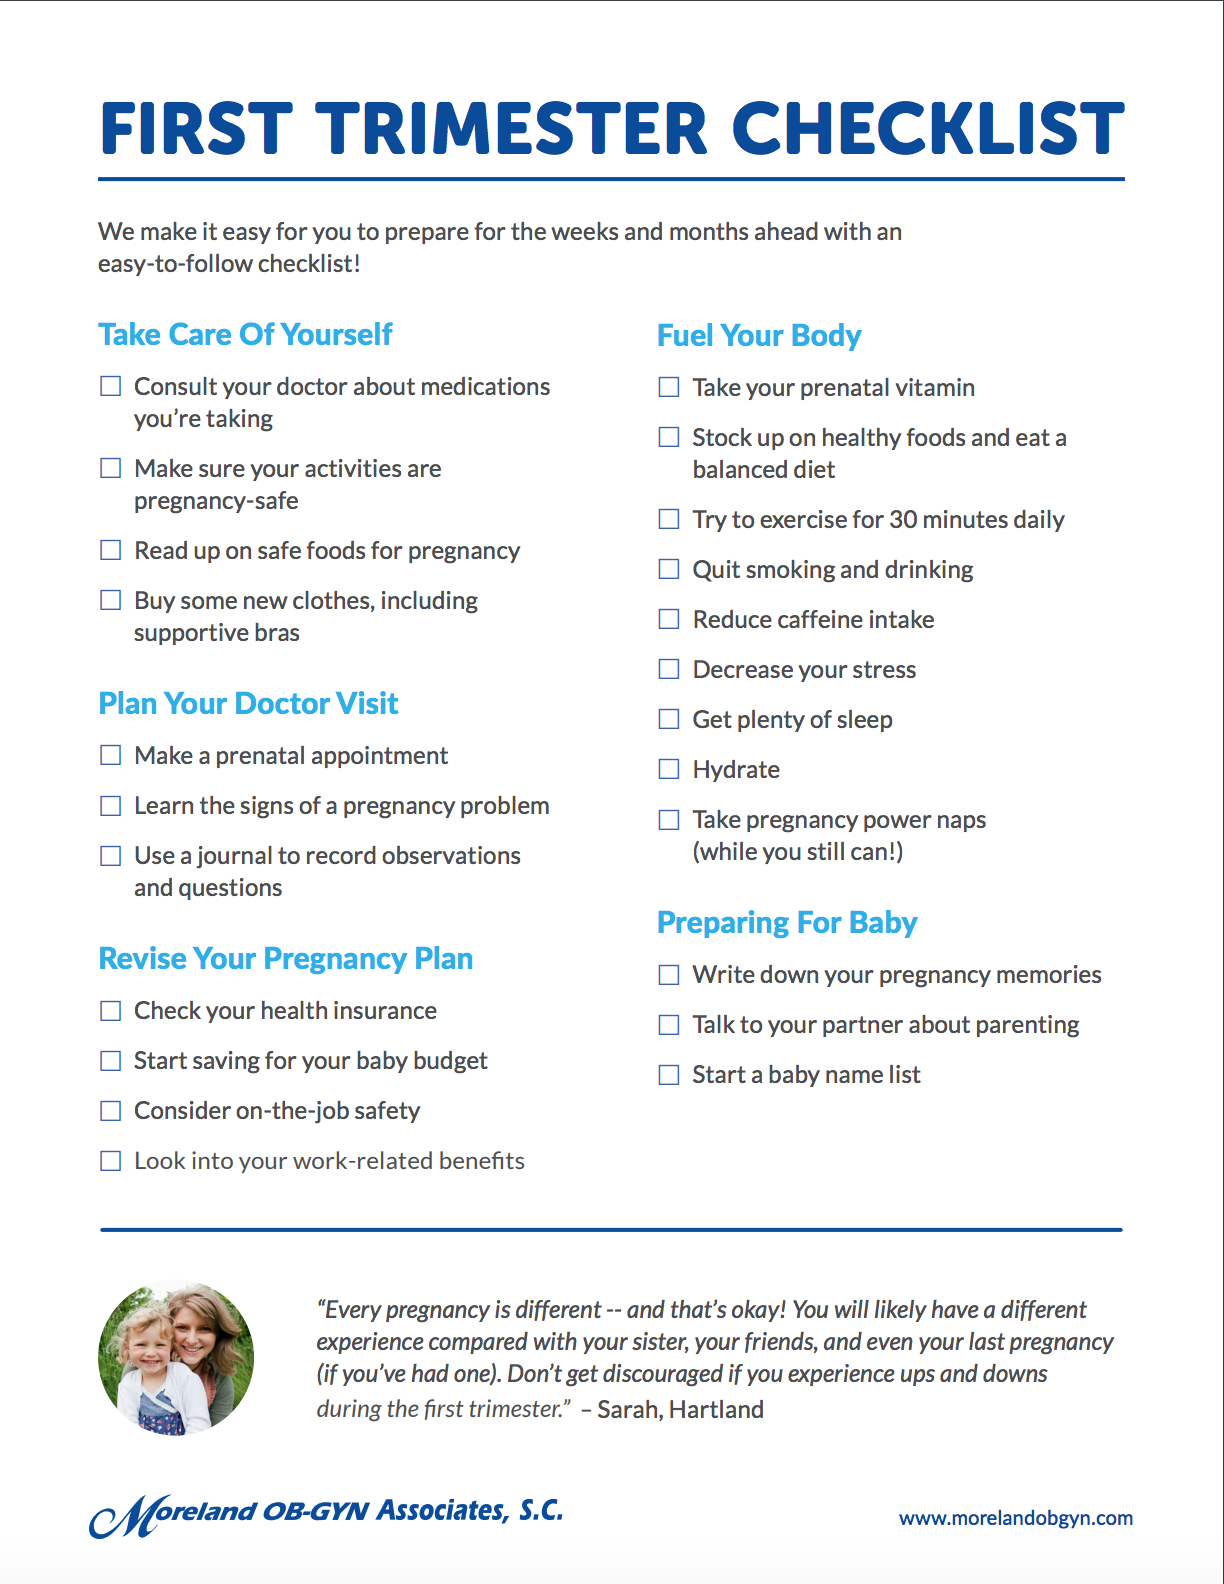 https://www.morelandobgyn.com/hubfs/Imported_Blog_Media/first-trimester-checklist-1.png